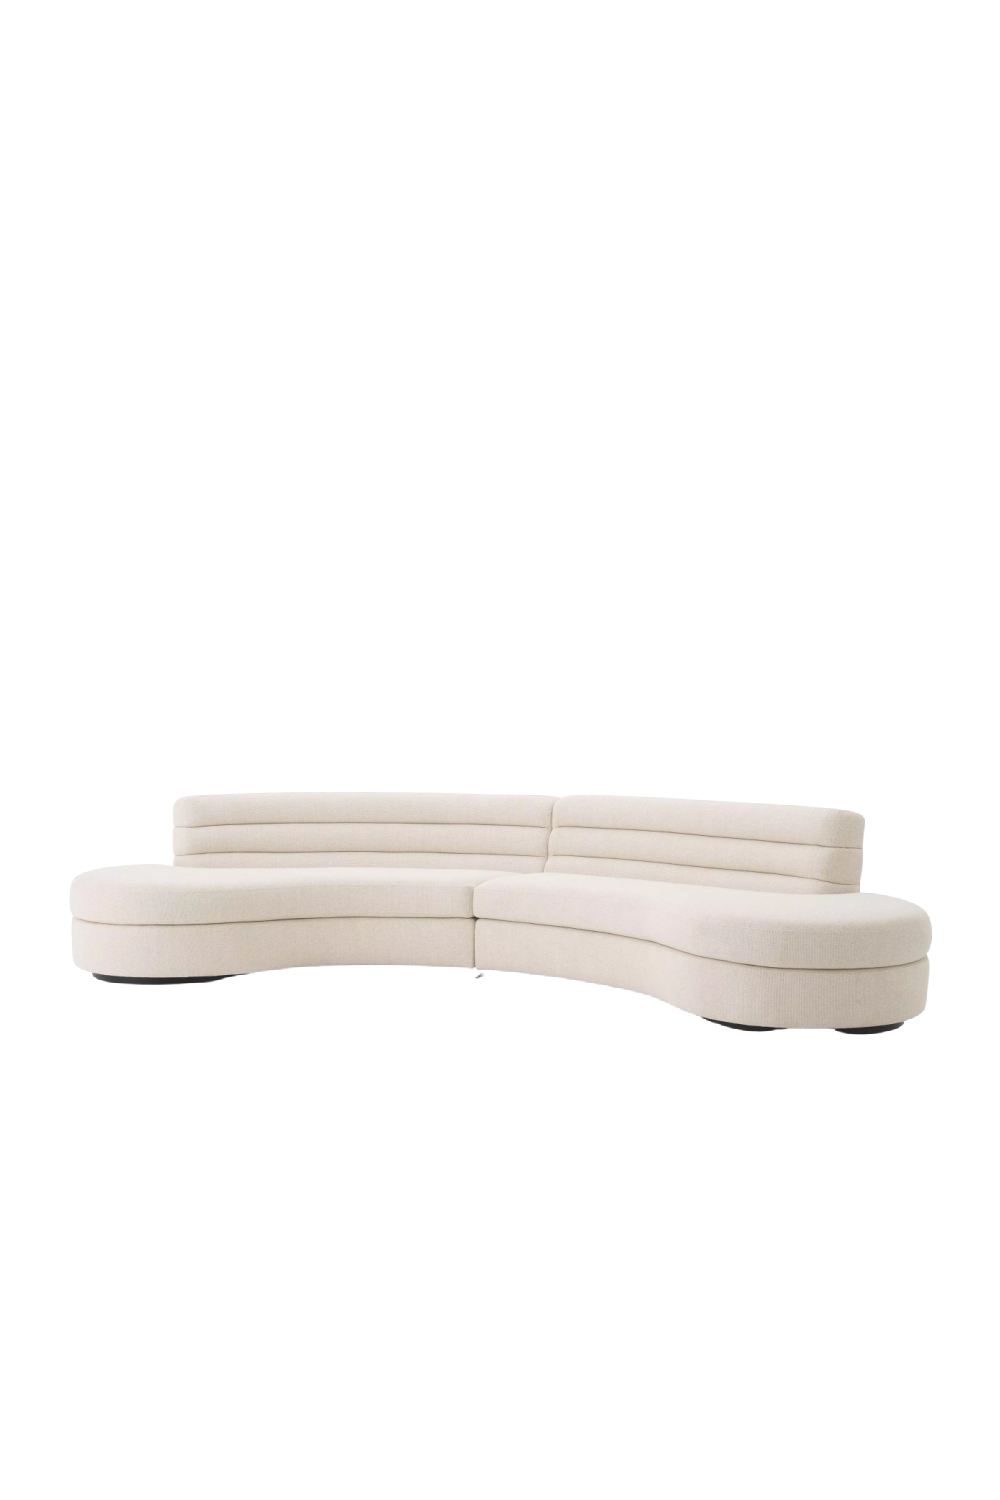 Organic-Shaped Sectional Sofa | Eichholtz Lennox | Oroa.com